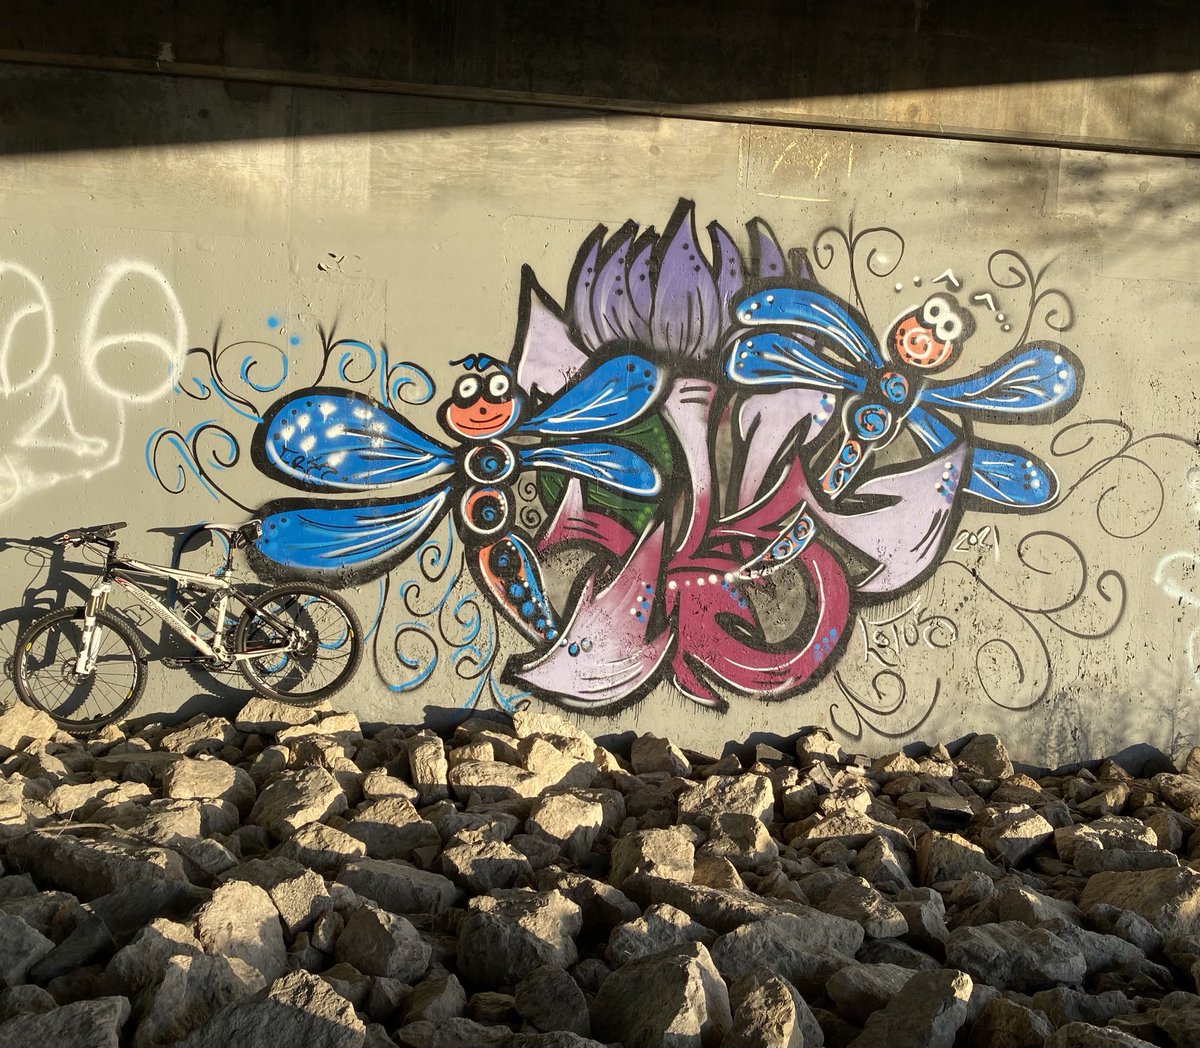 Local Street Art on the event bike tour #30daysofbiking #muralmonday #art #lovetheride